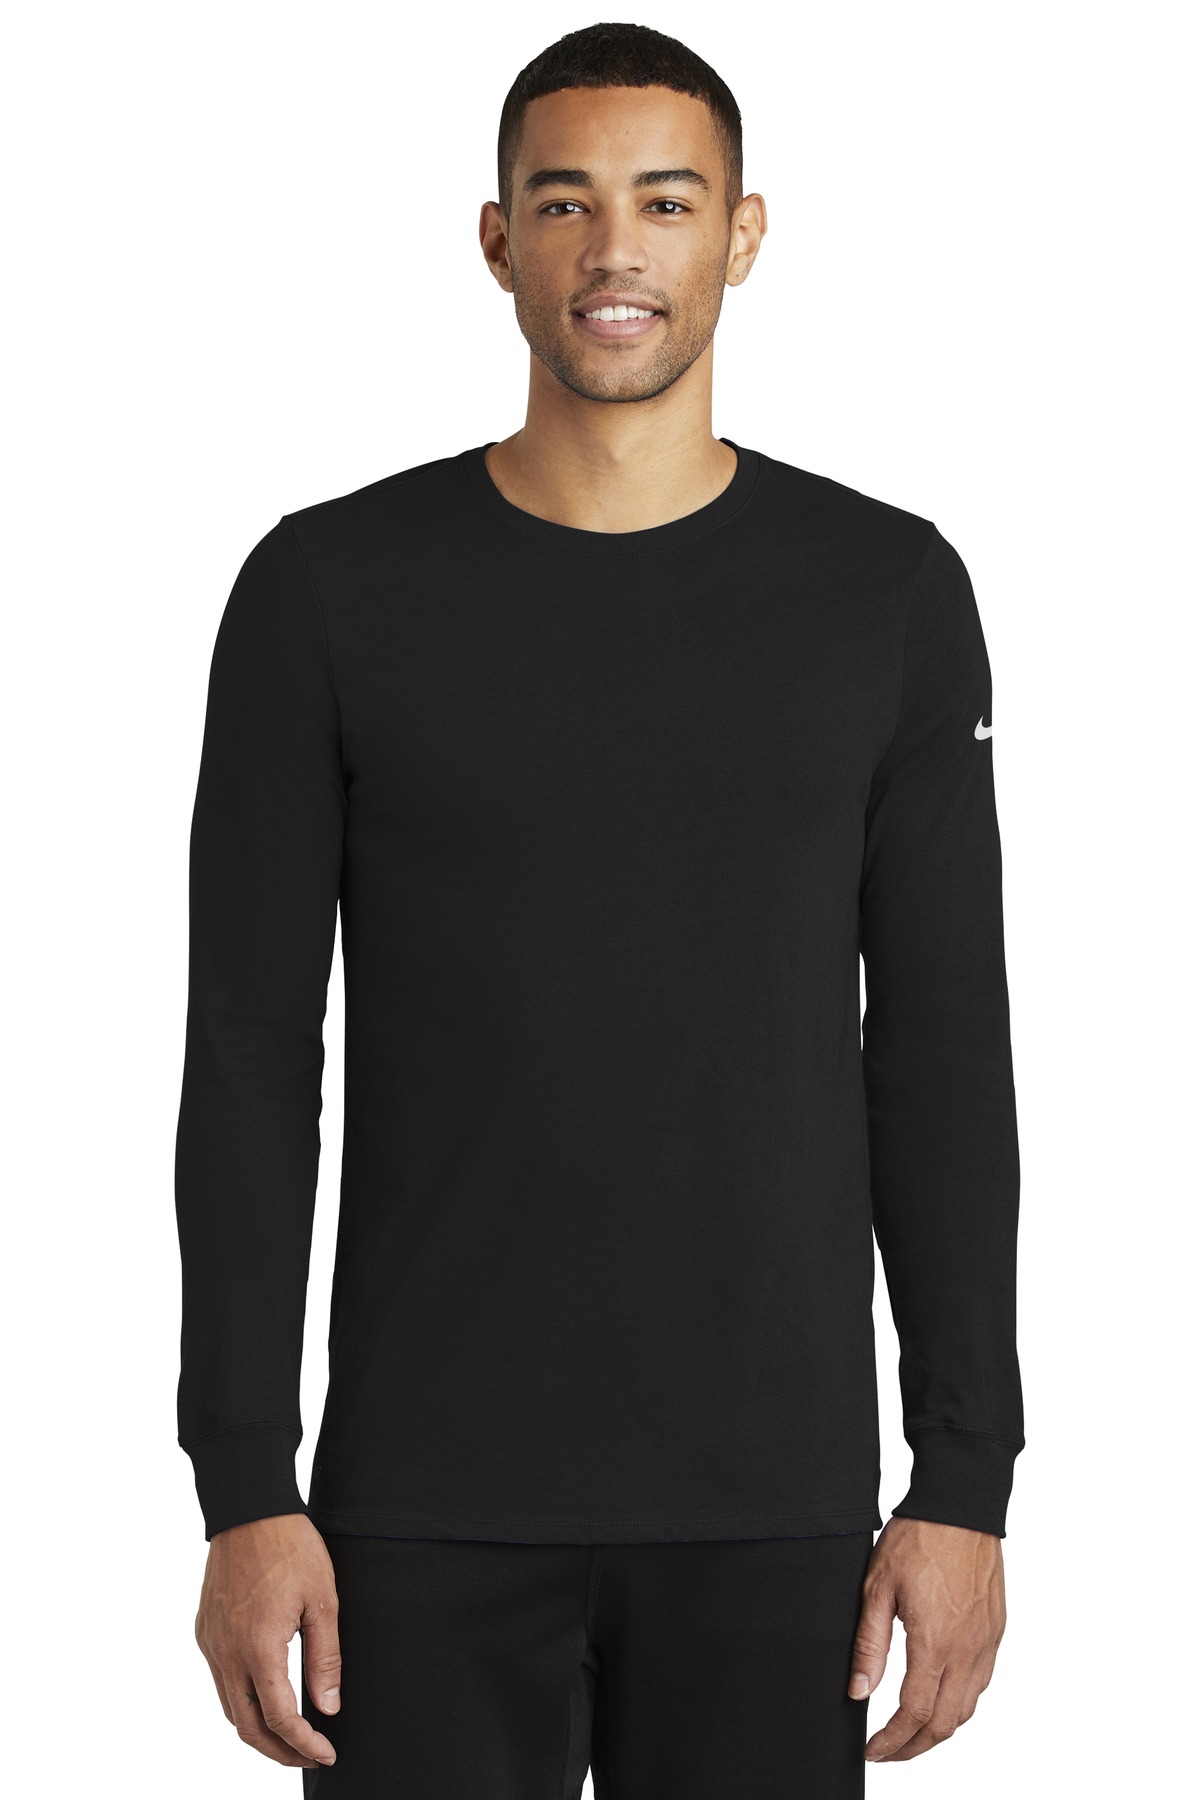 Nike Hospitality T-Shirts Dri-FIT Cotton/Poly Long Sleeve Tee.-Nike